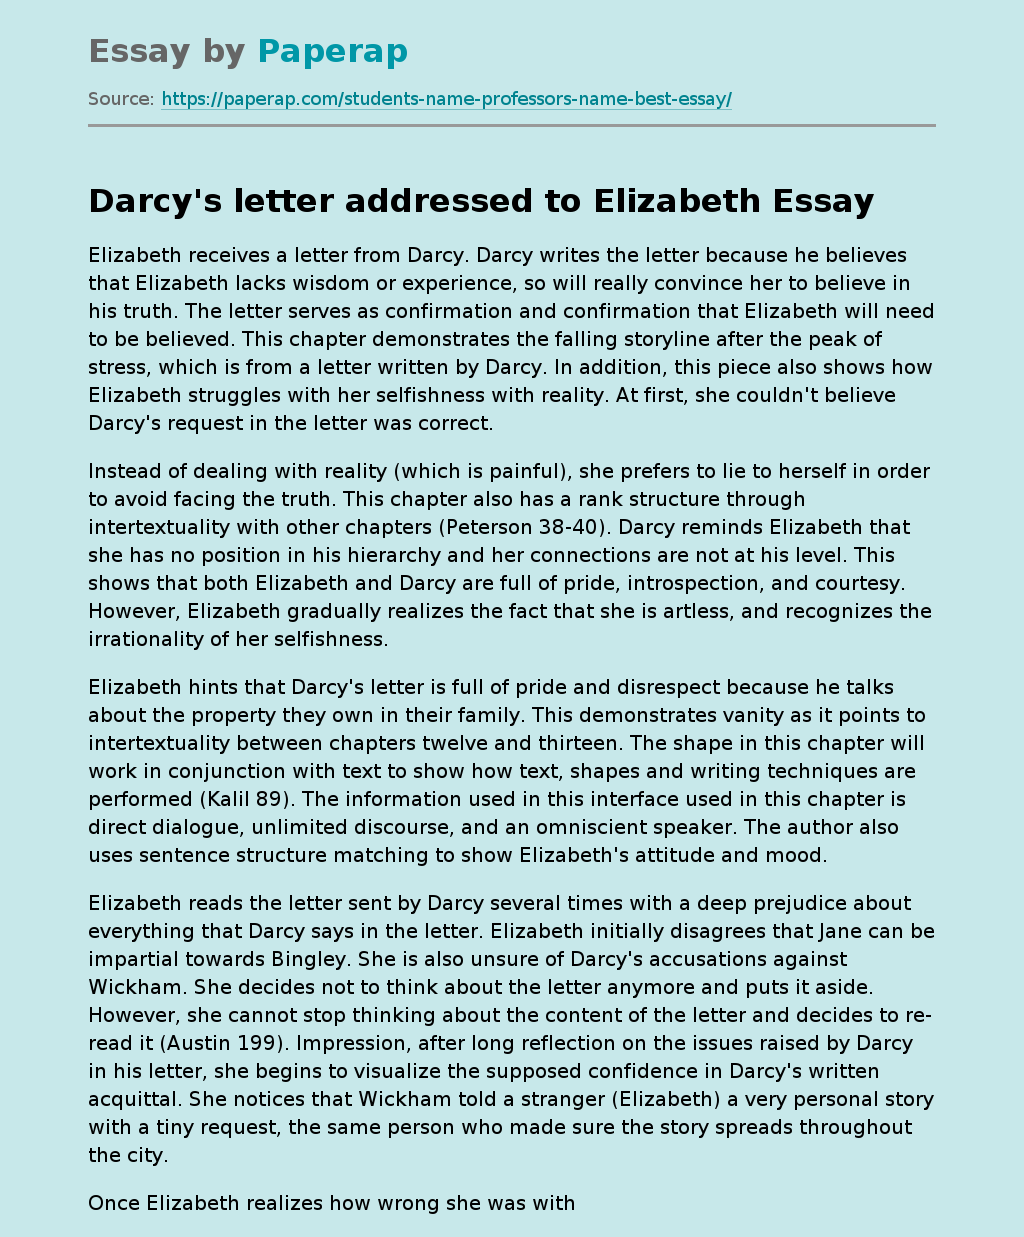 Darcy's letter addressed to Elizabeth